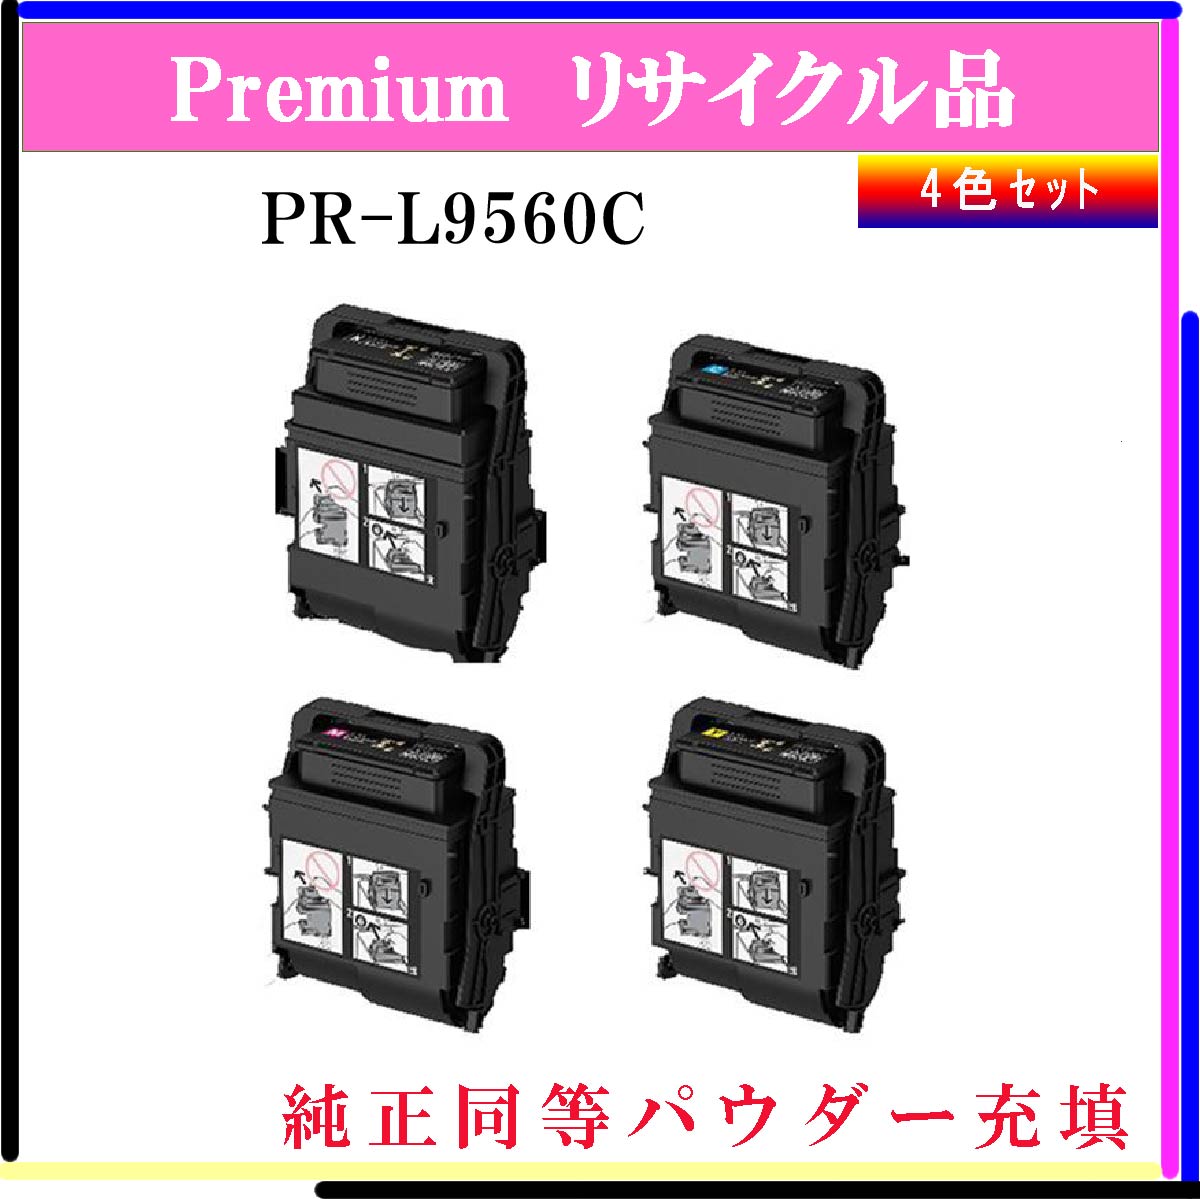 PR-L9560C (4色ｾｯﾄ) (純正同等ﾊﾟｳﾀﾞｰ)